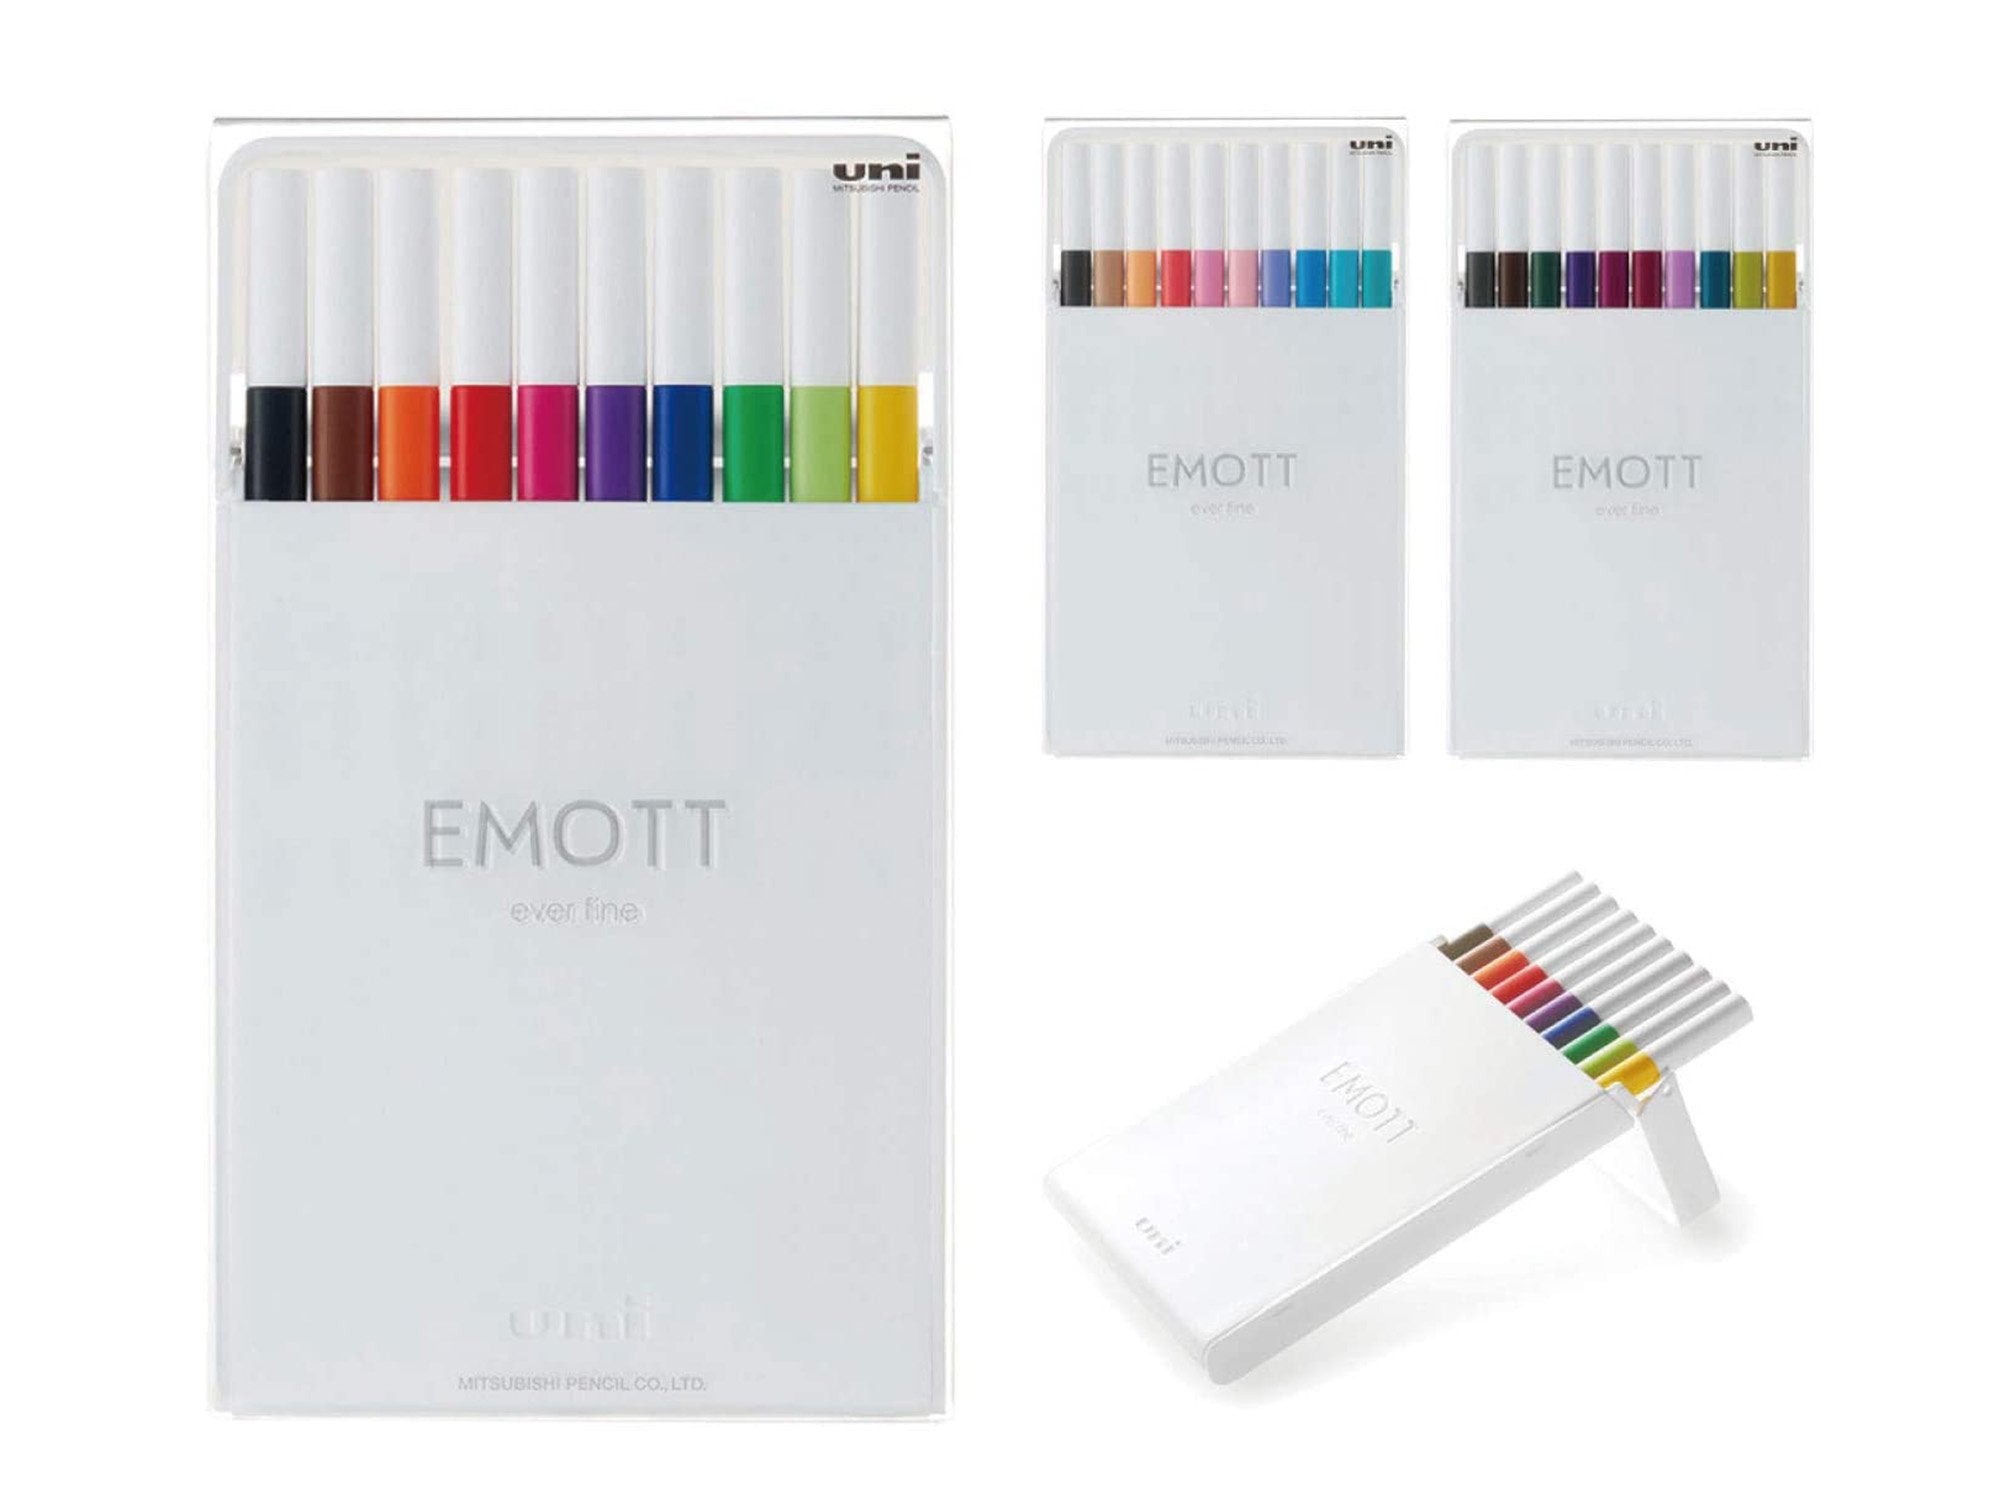  Emott Fineliner Pen Set #1, 40-Colors, Assorted